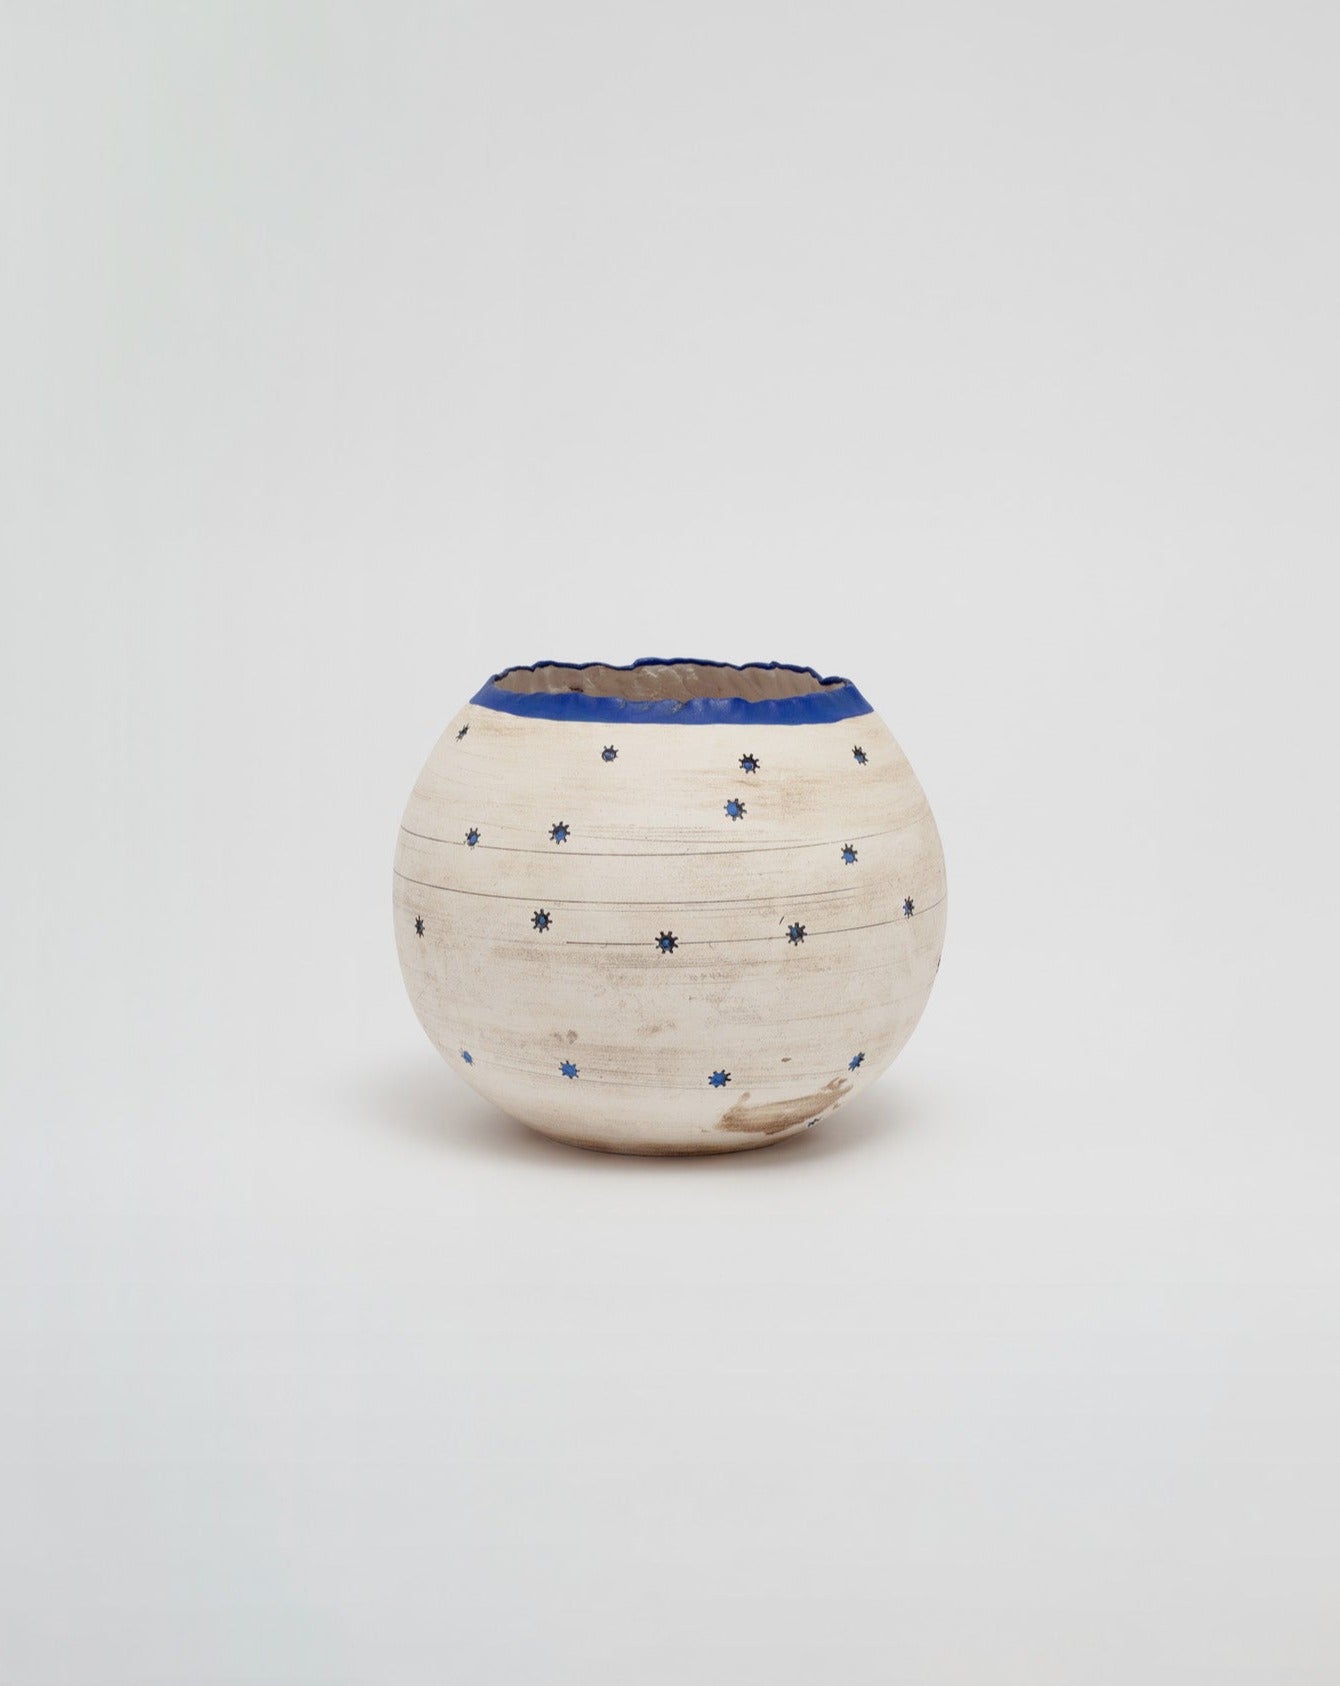 Hand built ceramic vase by Zizipho Poswa for Imiso